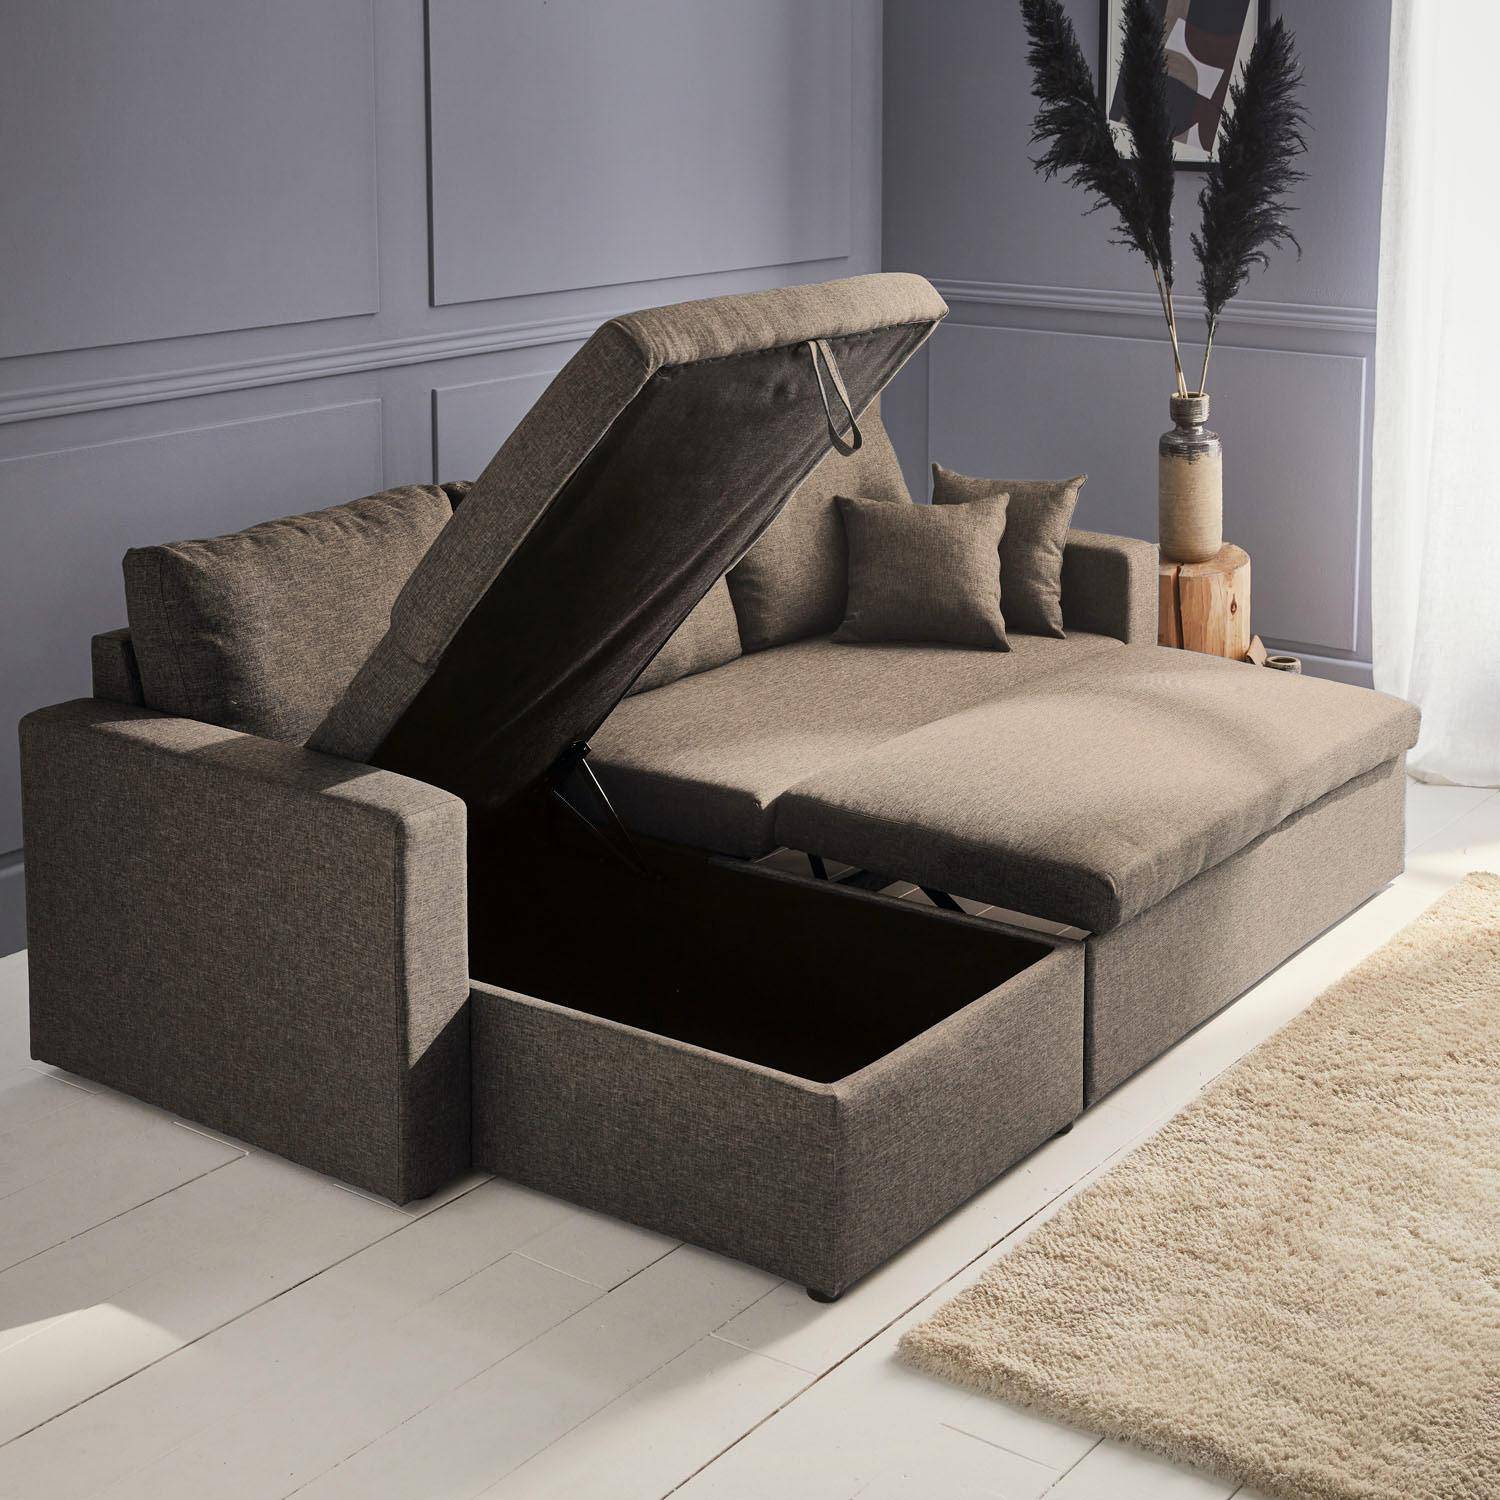 3-seater reversible brown corner sofa bed with storage box, brown, L219xD81xH68cm, IDA Photo3